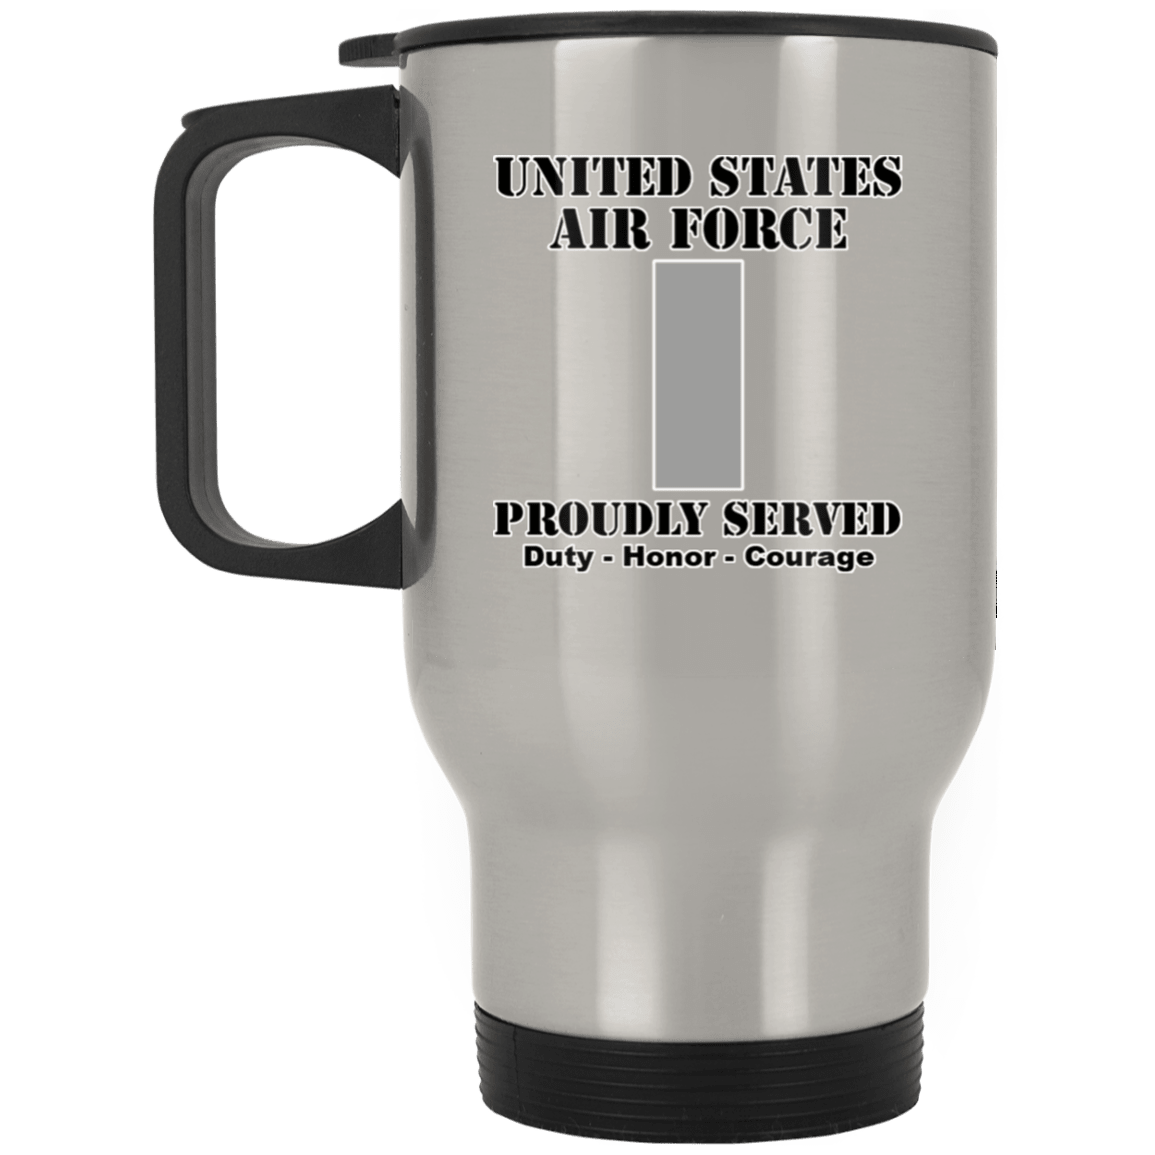 US Air Force O-2 First Lieutenant 1st L O2 Commissioned Officer Ranks White Coffee Mug - Stainless Travel Mug-Mug-USAF-Ranks-Veterans Nation